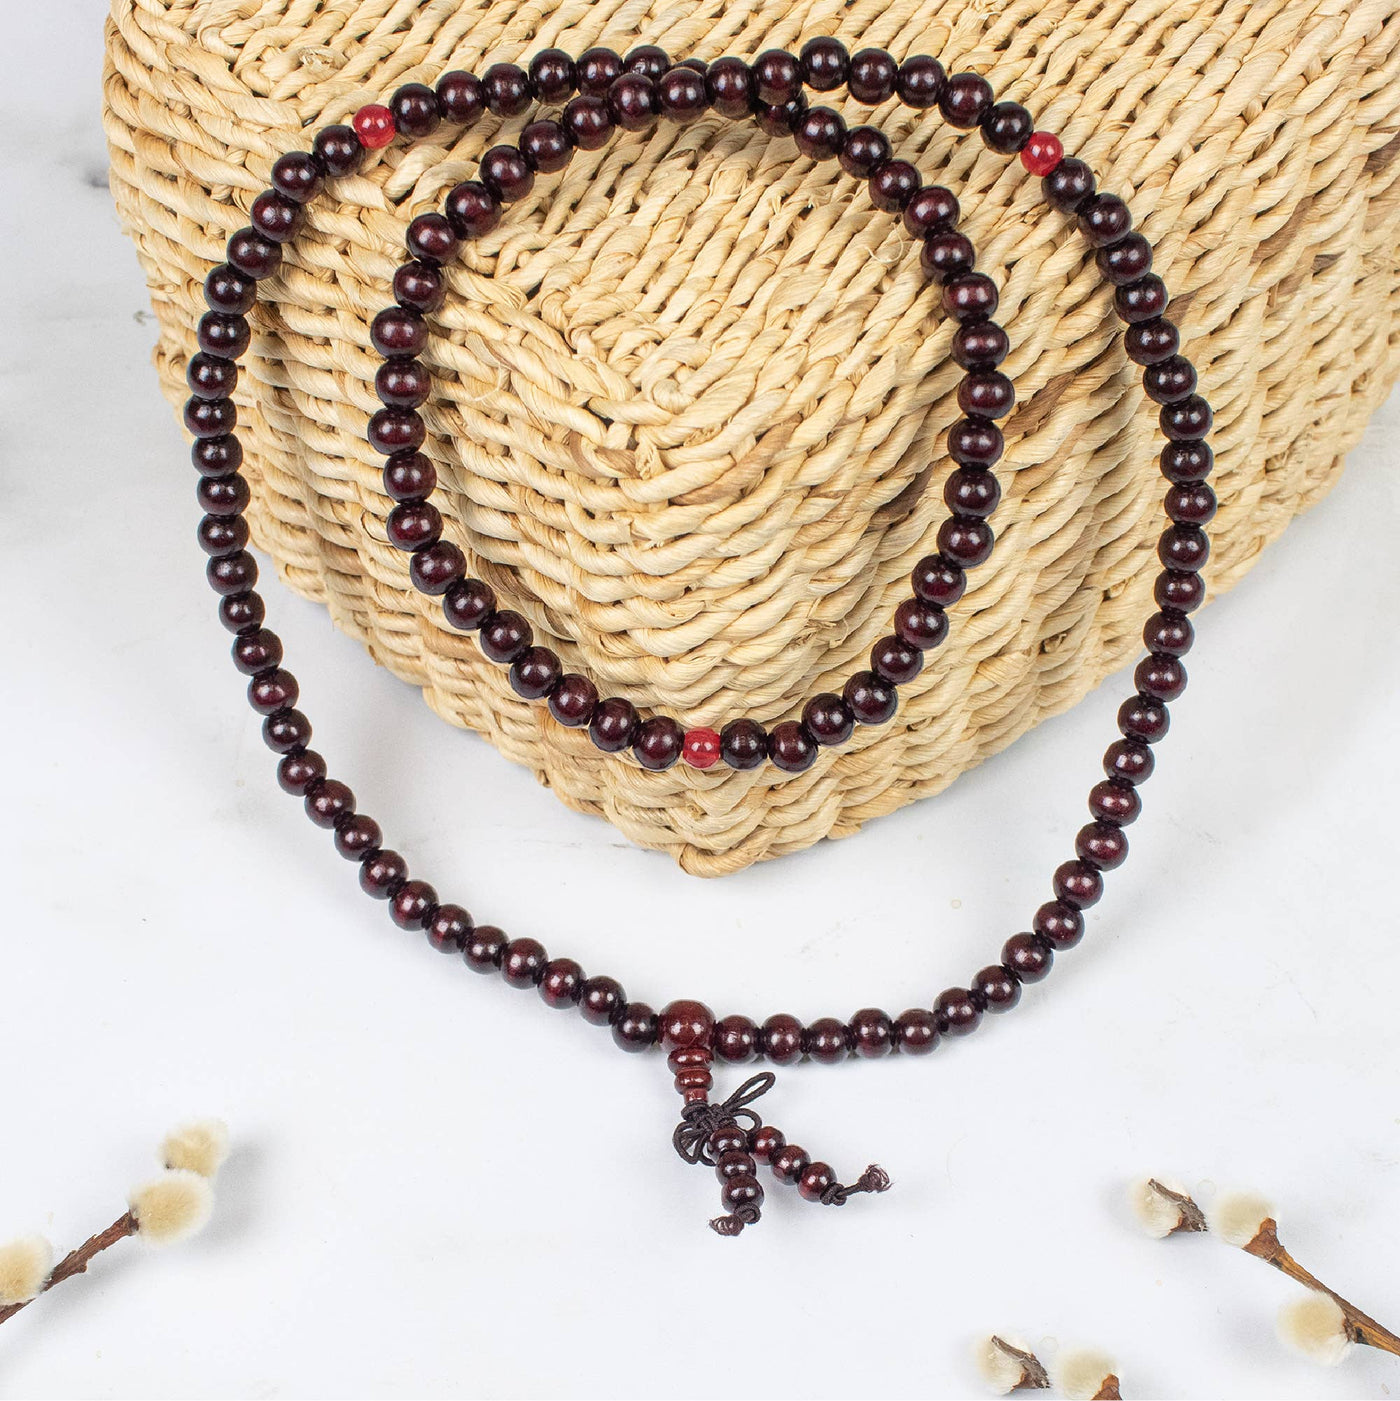 Mala Meditation 108 Bead Necklace - Prayer